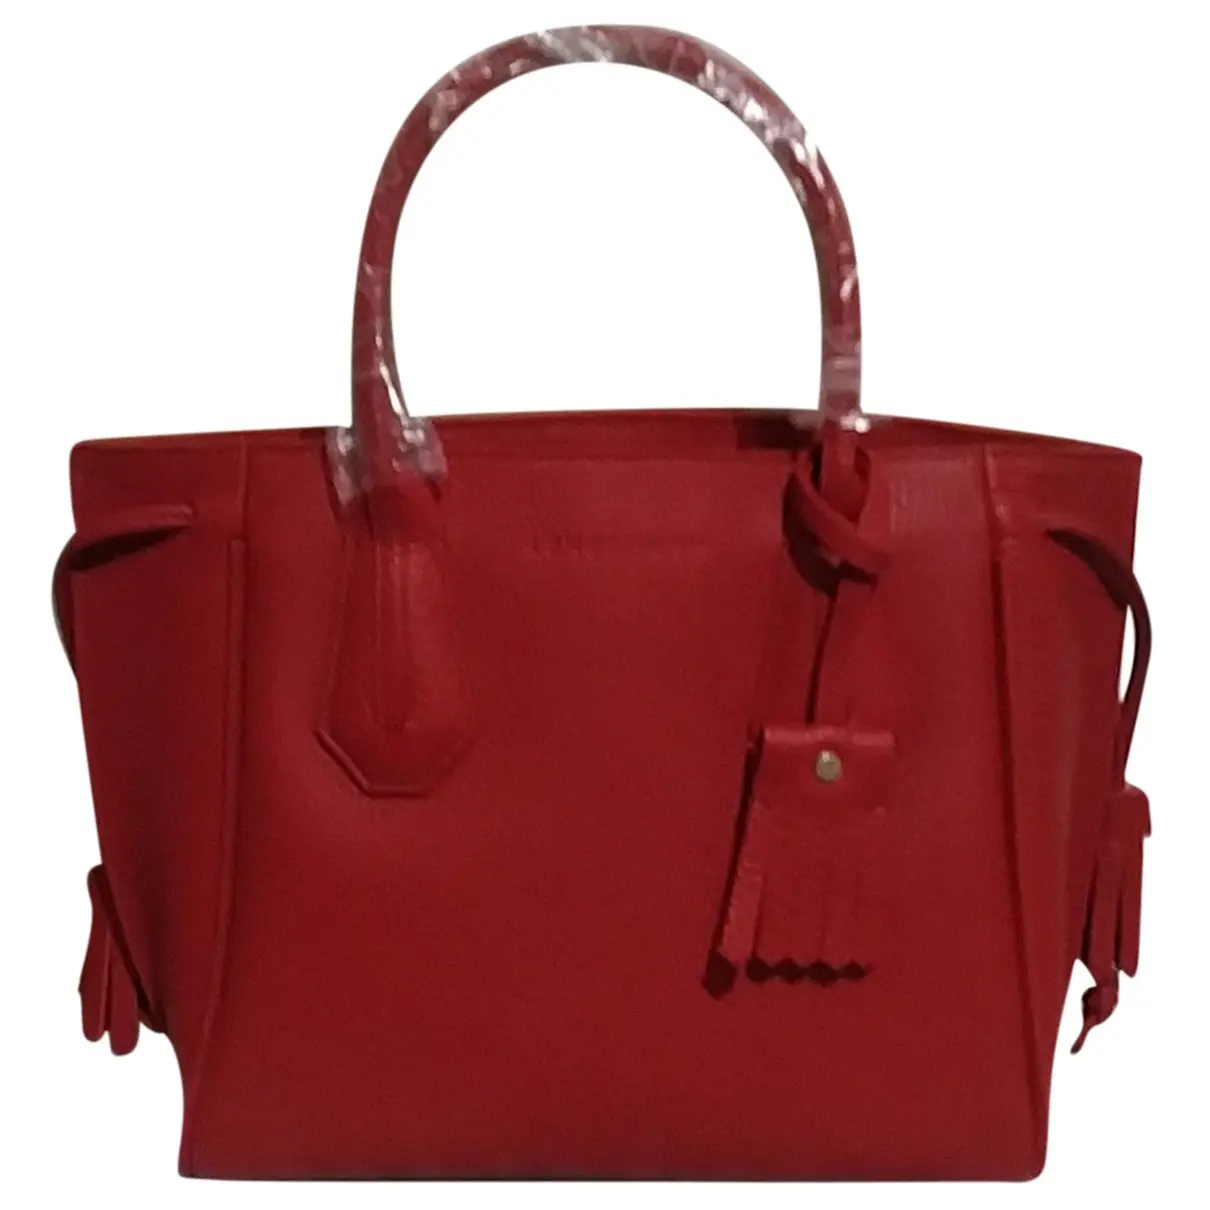 Penelope leather handbag Longchamp